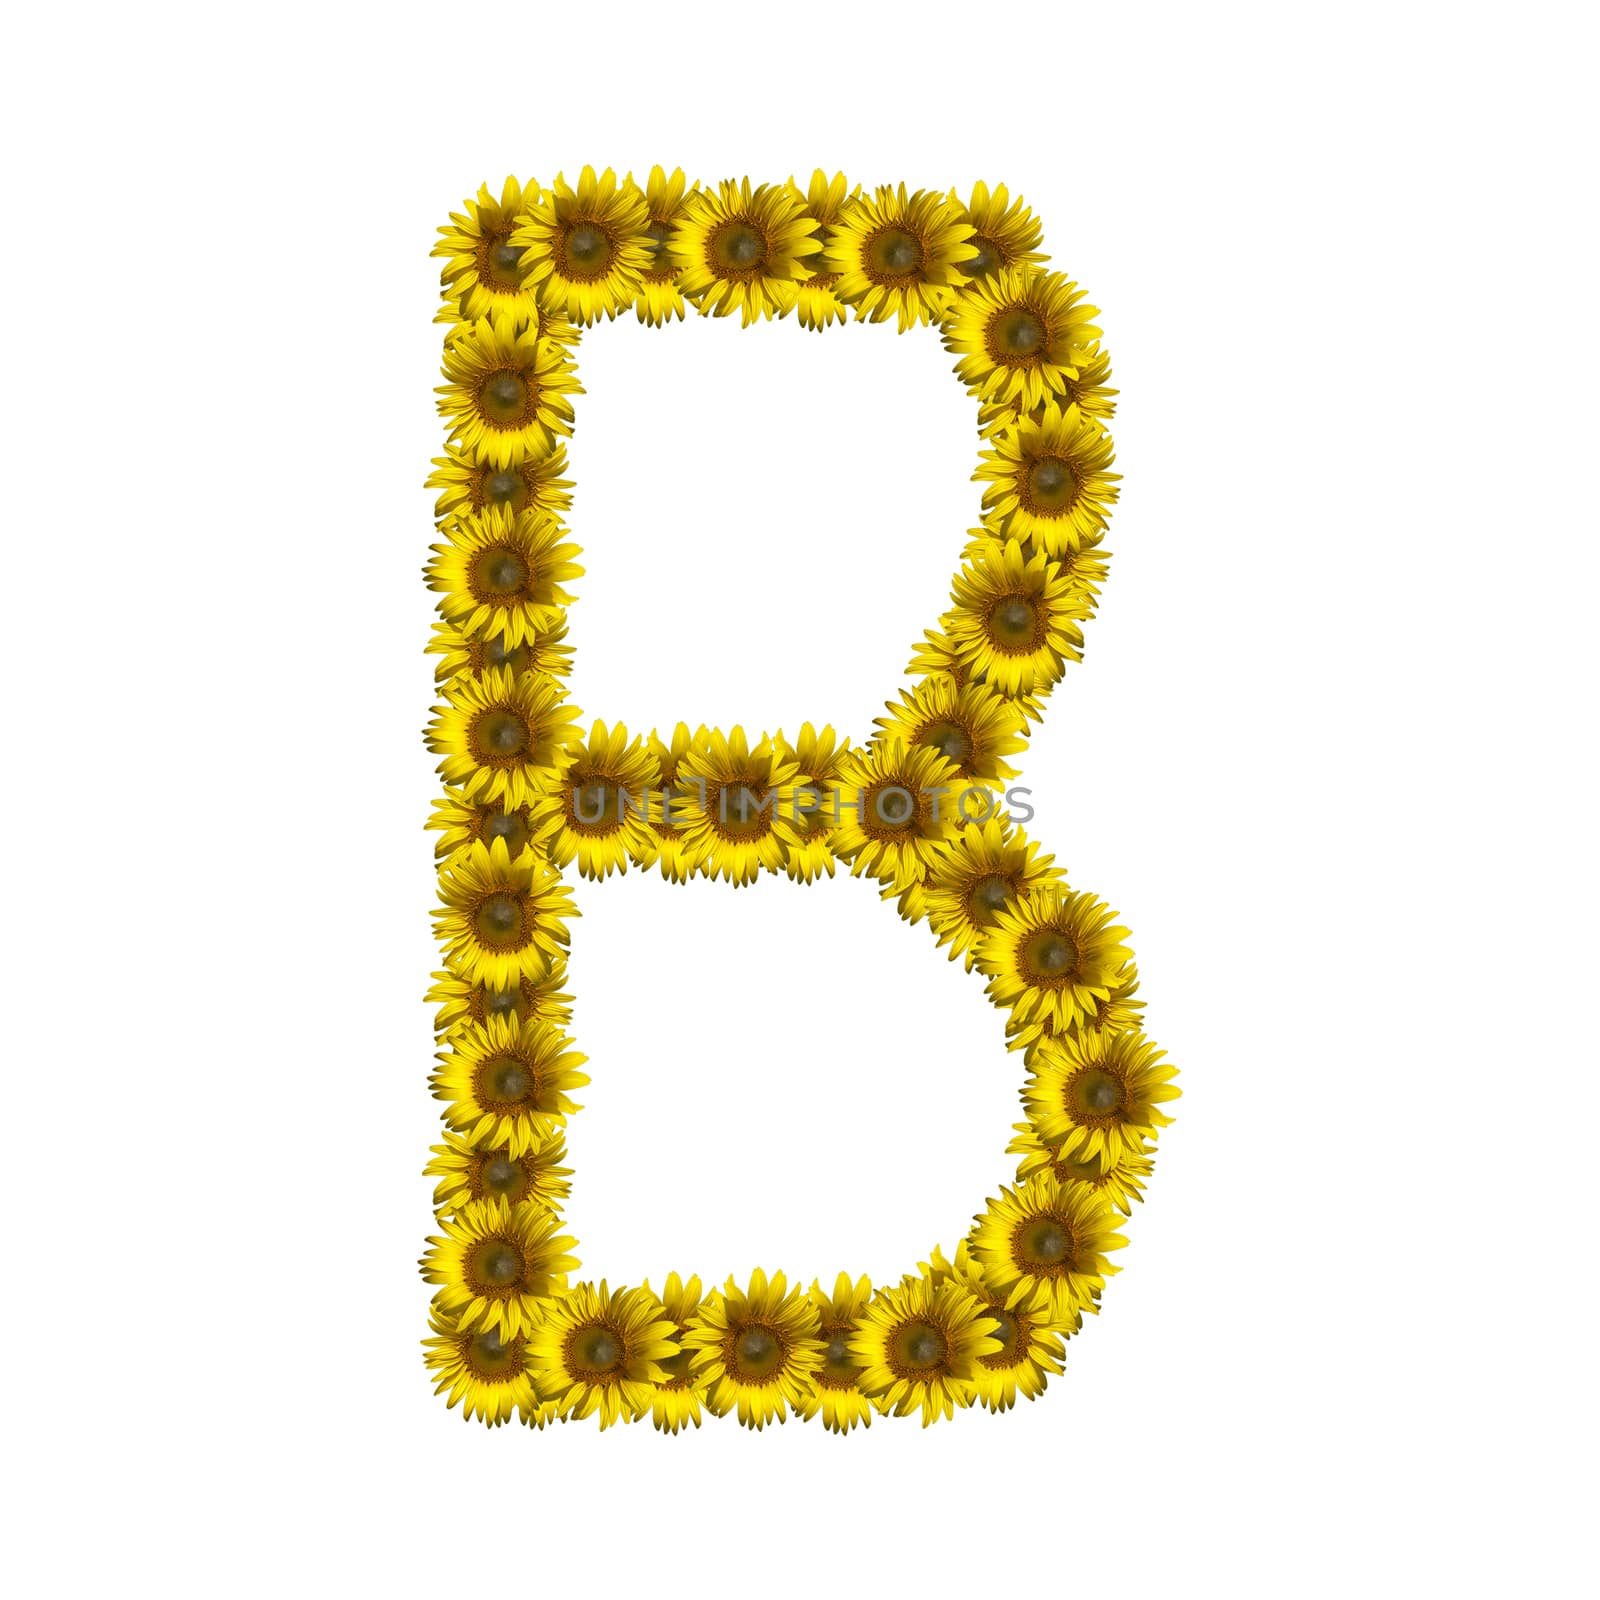 Sunflower alphabet isolated on white background, letter B